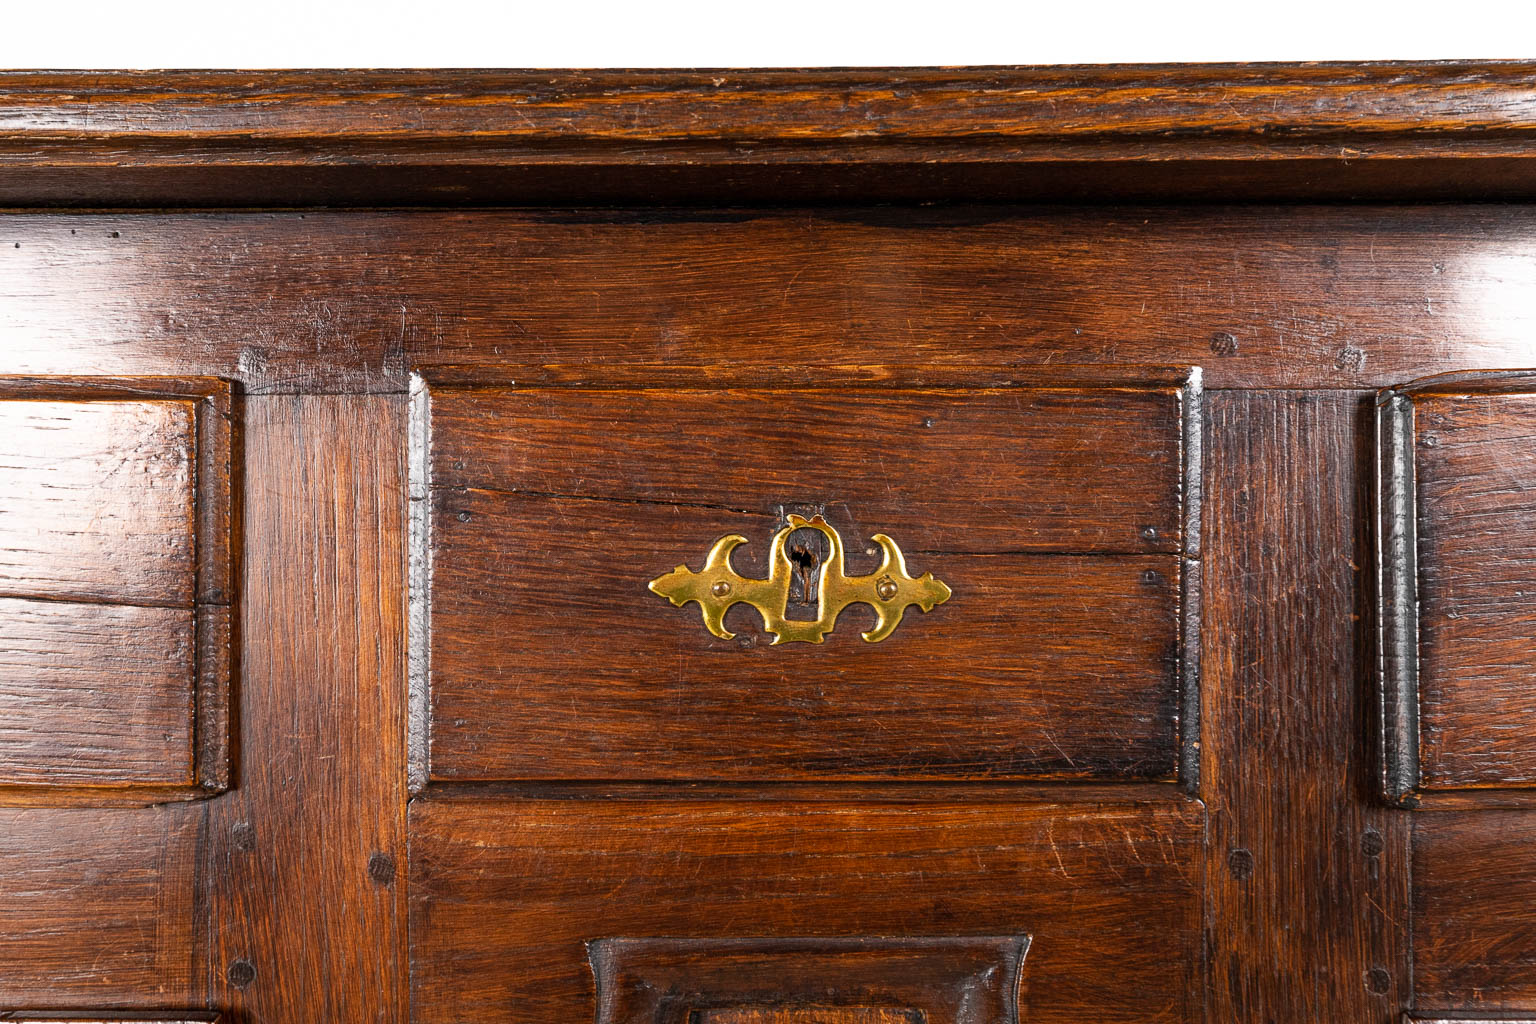 An antique dresser, oak, 2 doors and 3 drawers. 19th C. (D:54 x W:113 x H:164 cm)